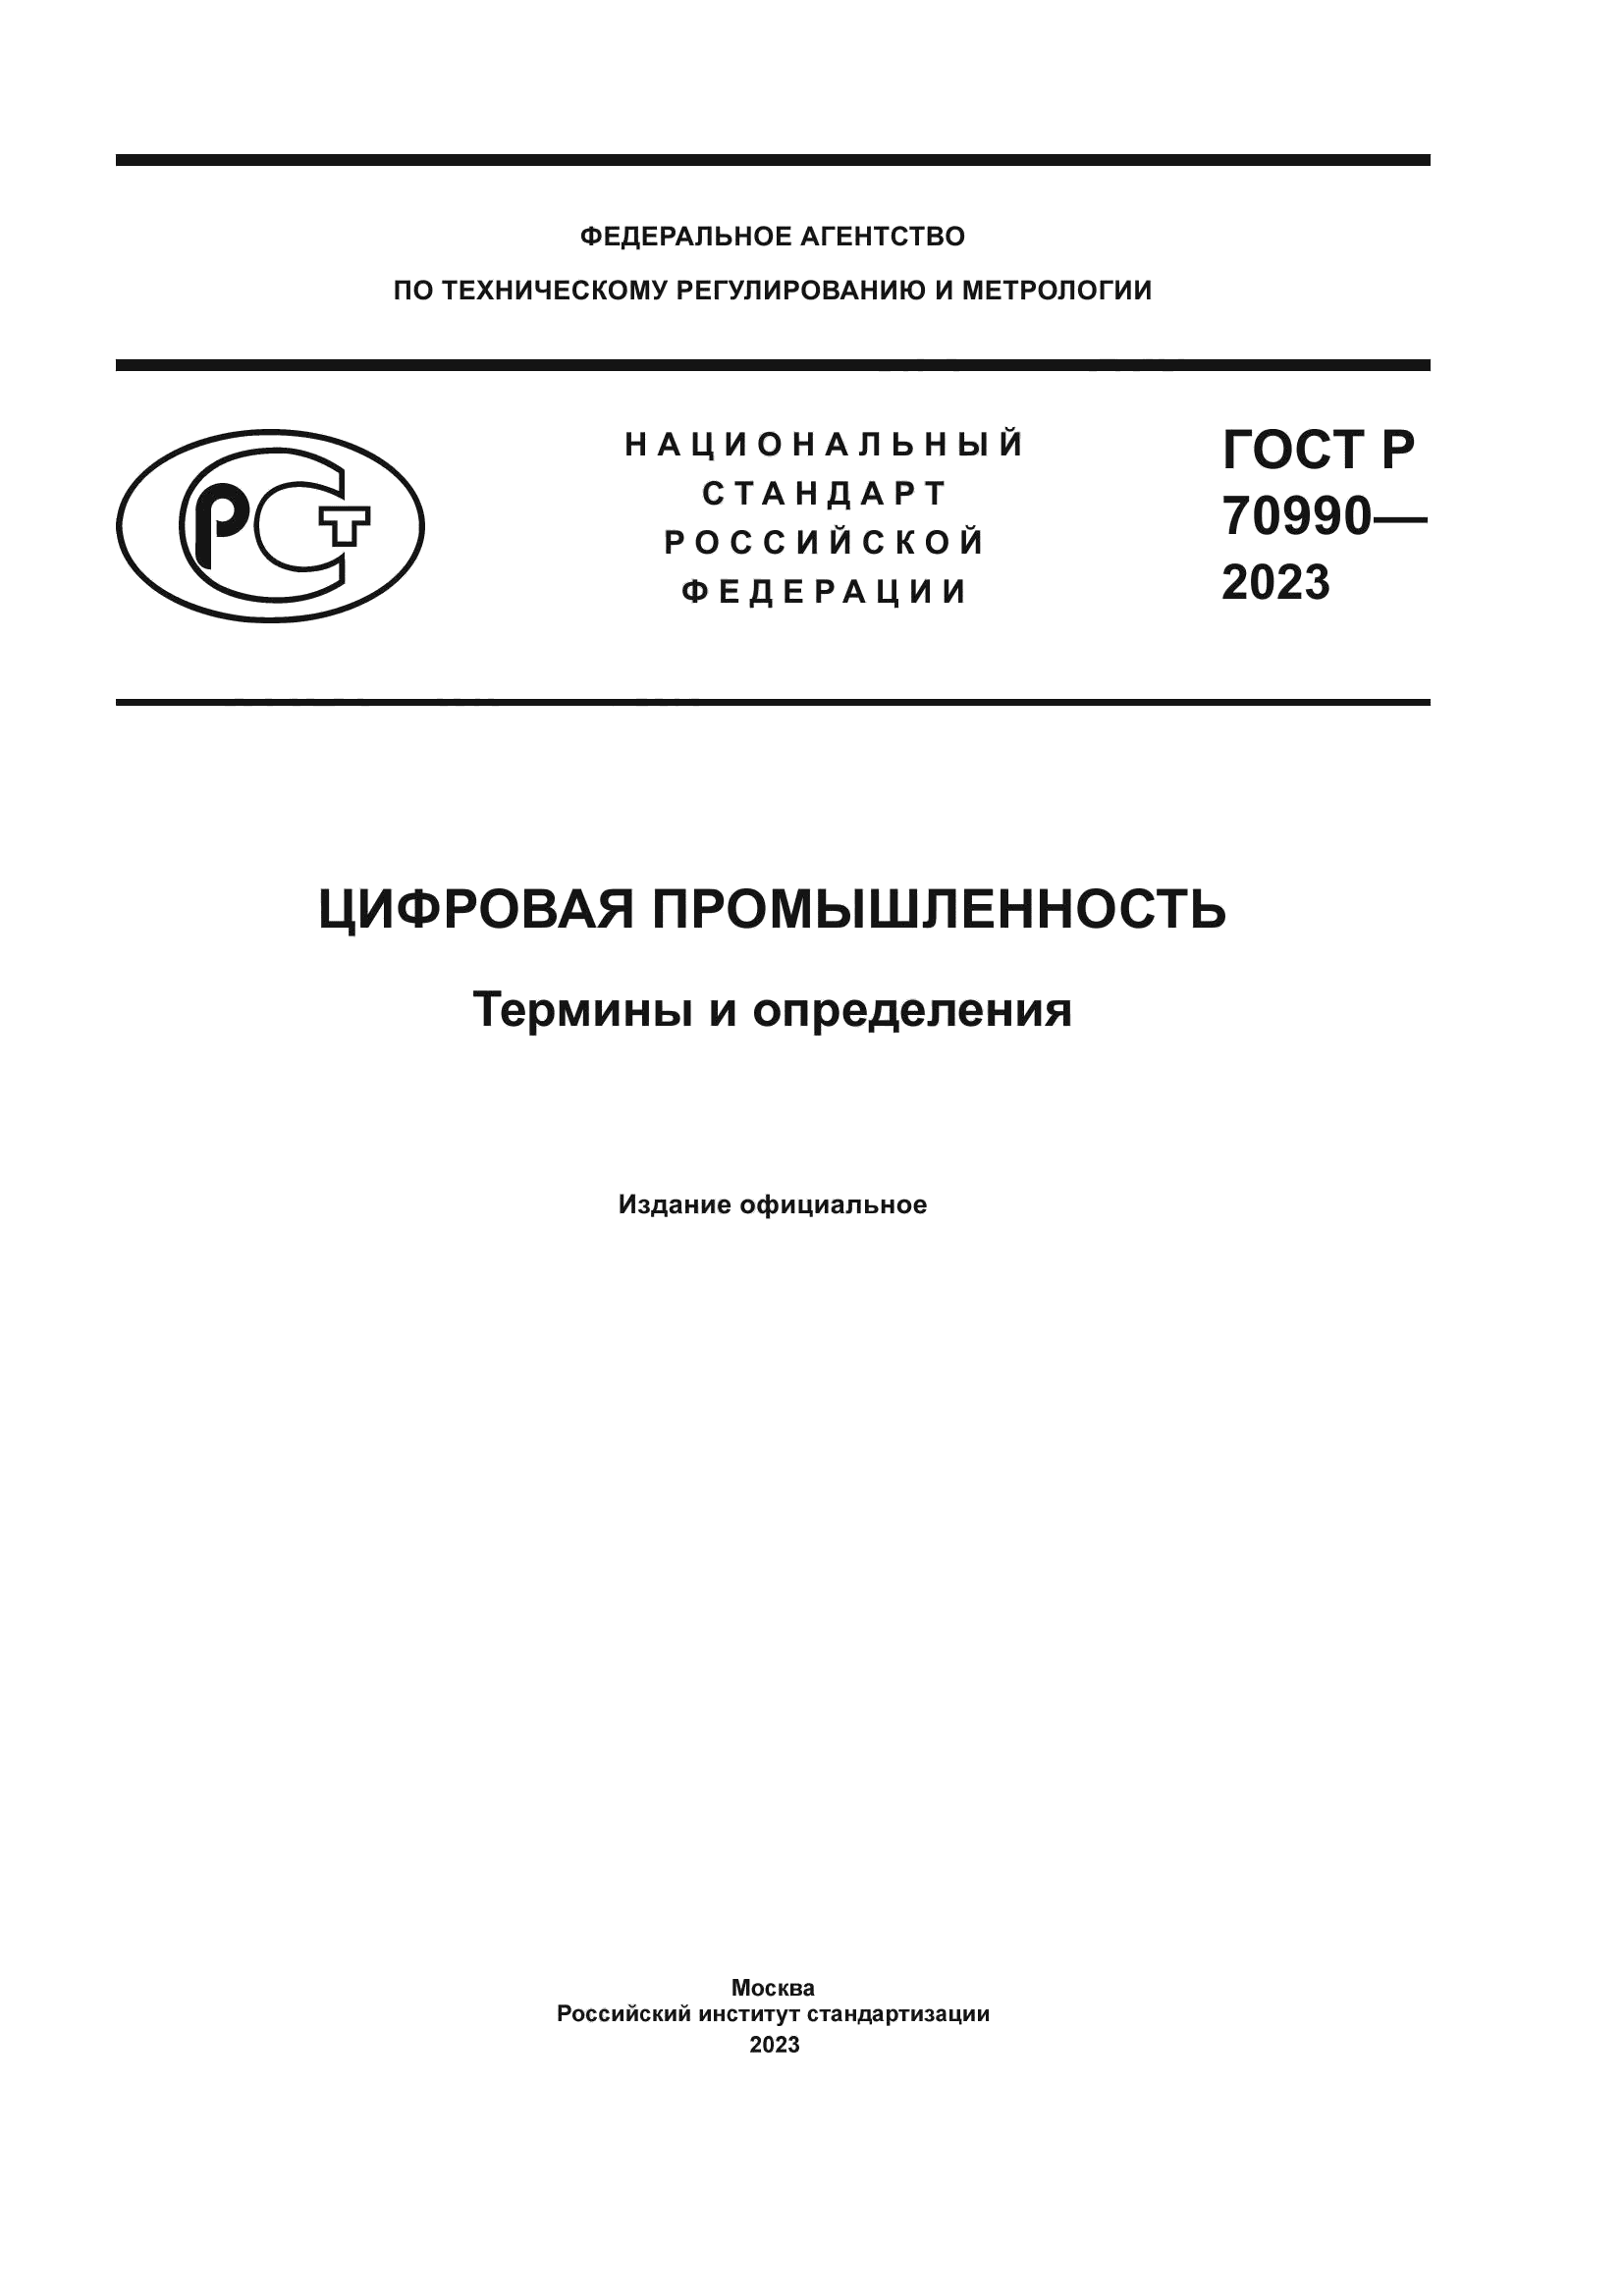 ГОСТ Р 70990-2023